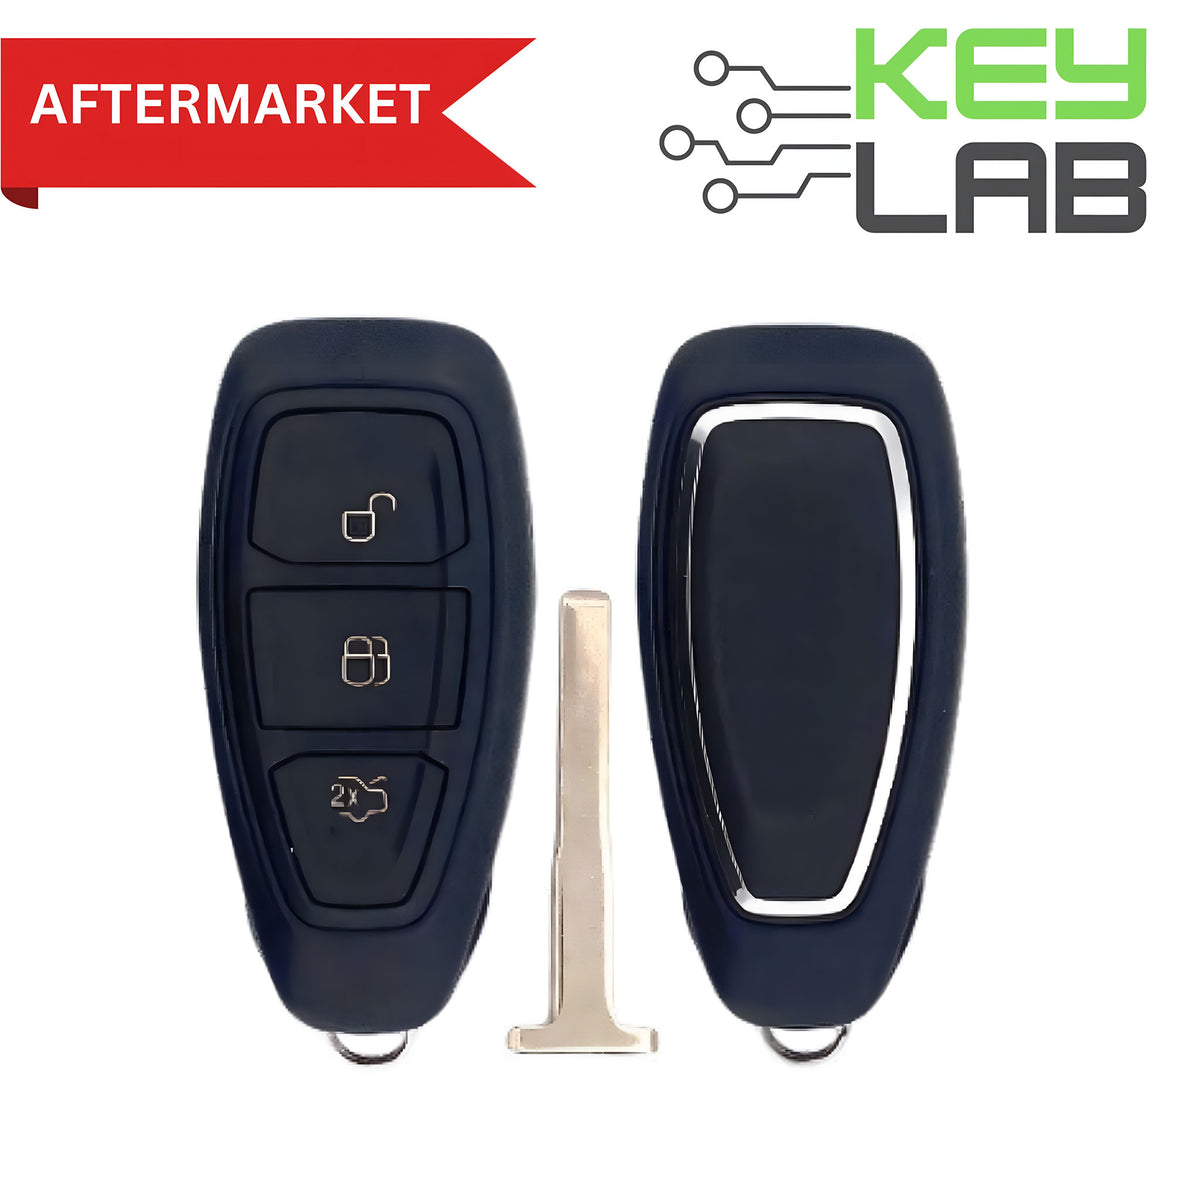 Ford Aftermarket 2011-2019 Fiesta, C-Max, Focus Smart Key 3B Trunk (No Panic) FCCID: KR55WK48801 PN# 5919918, 164-R8048 - Royal Key Supply